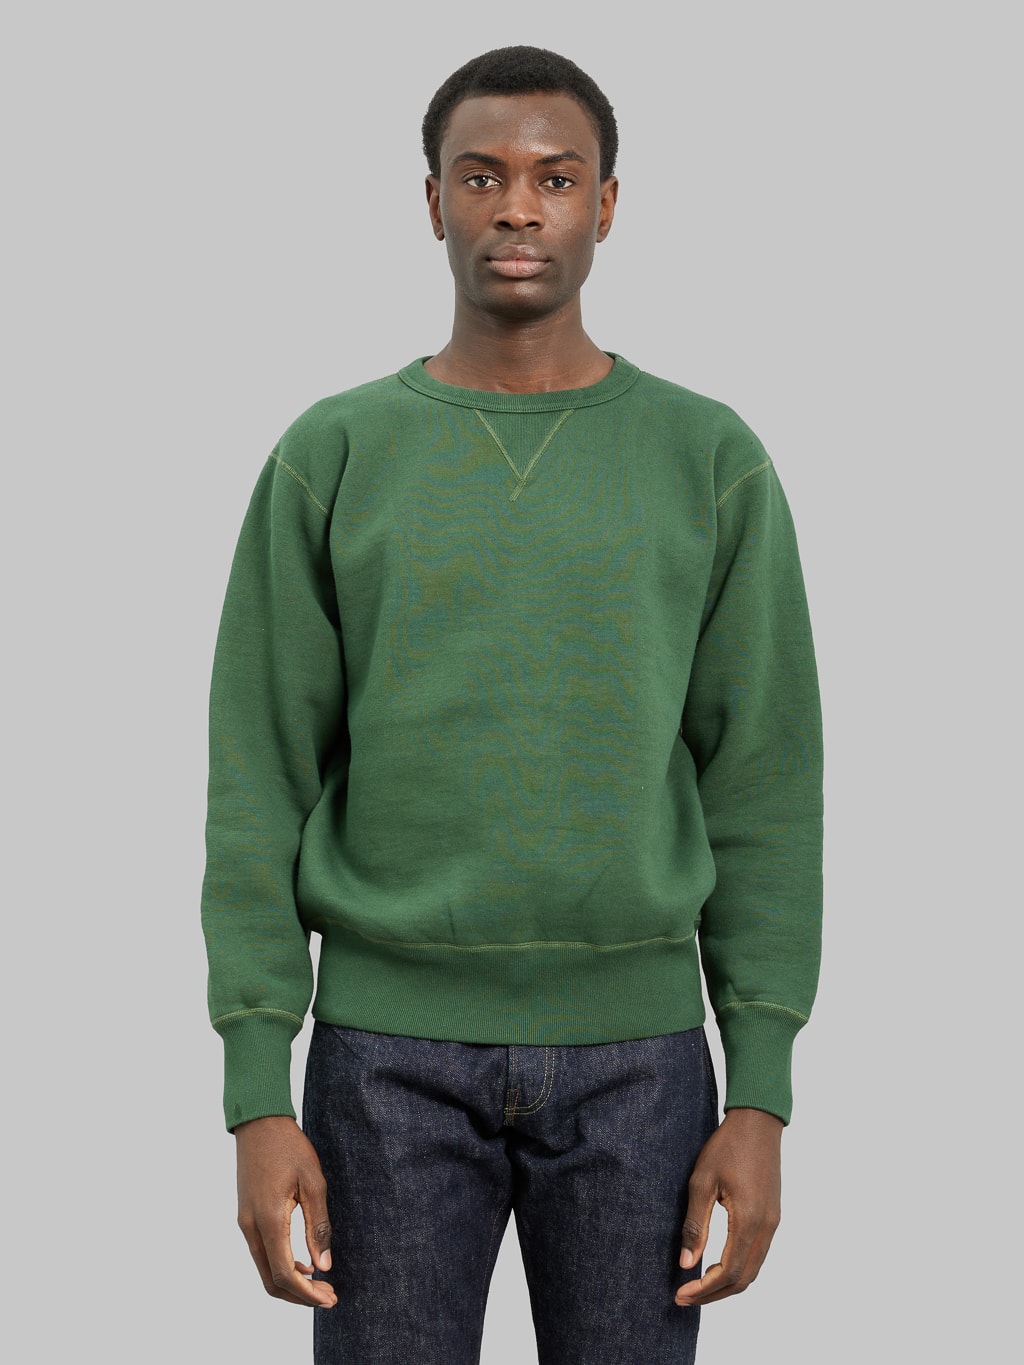 The Strike Gold Loopwheeled Sweatshirt Green model front fit